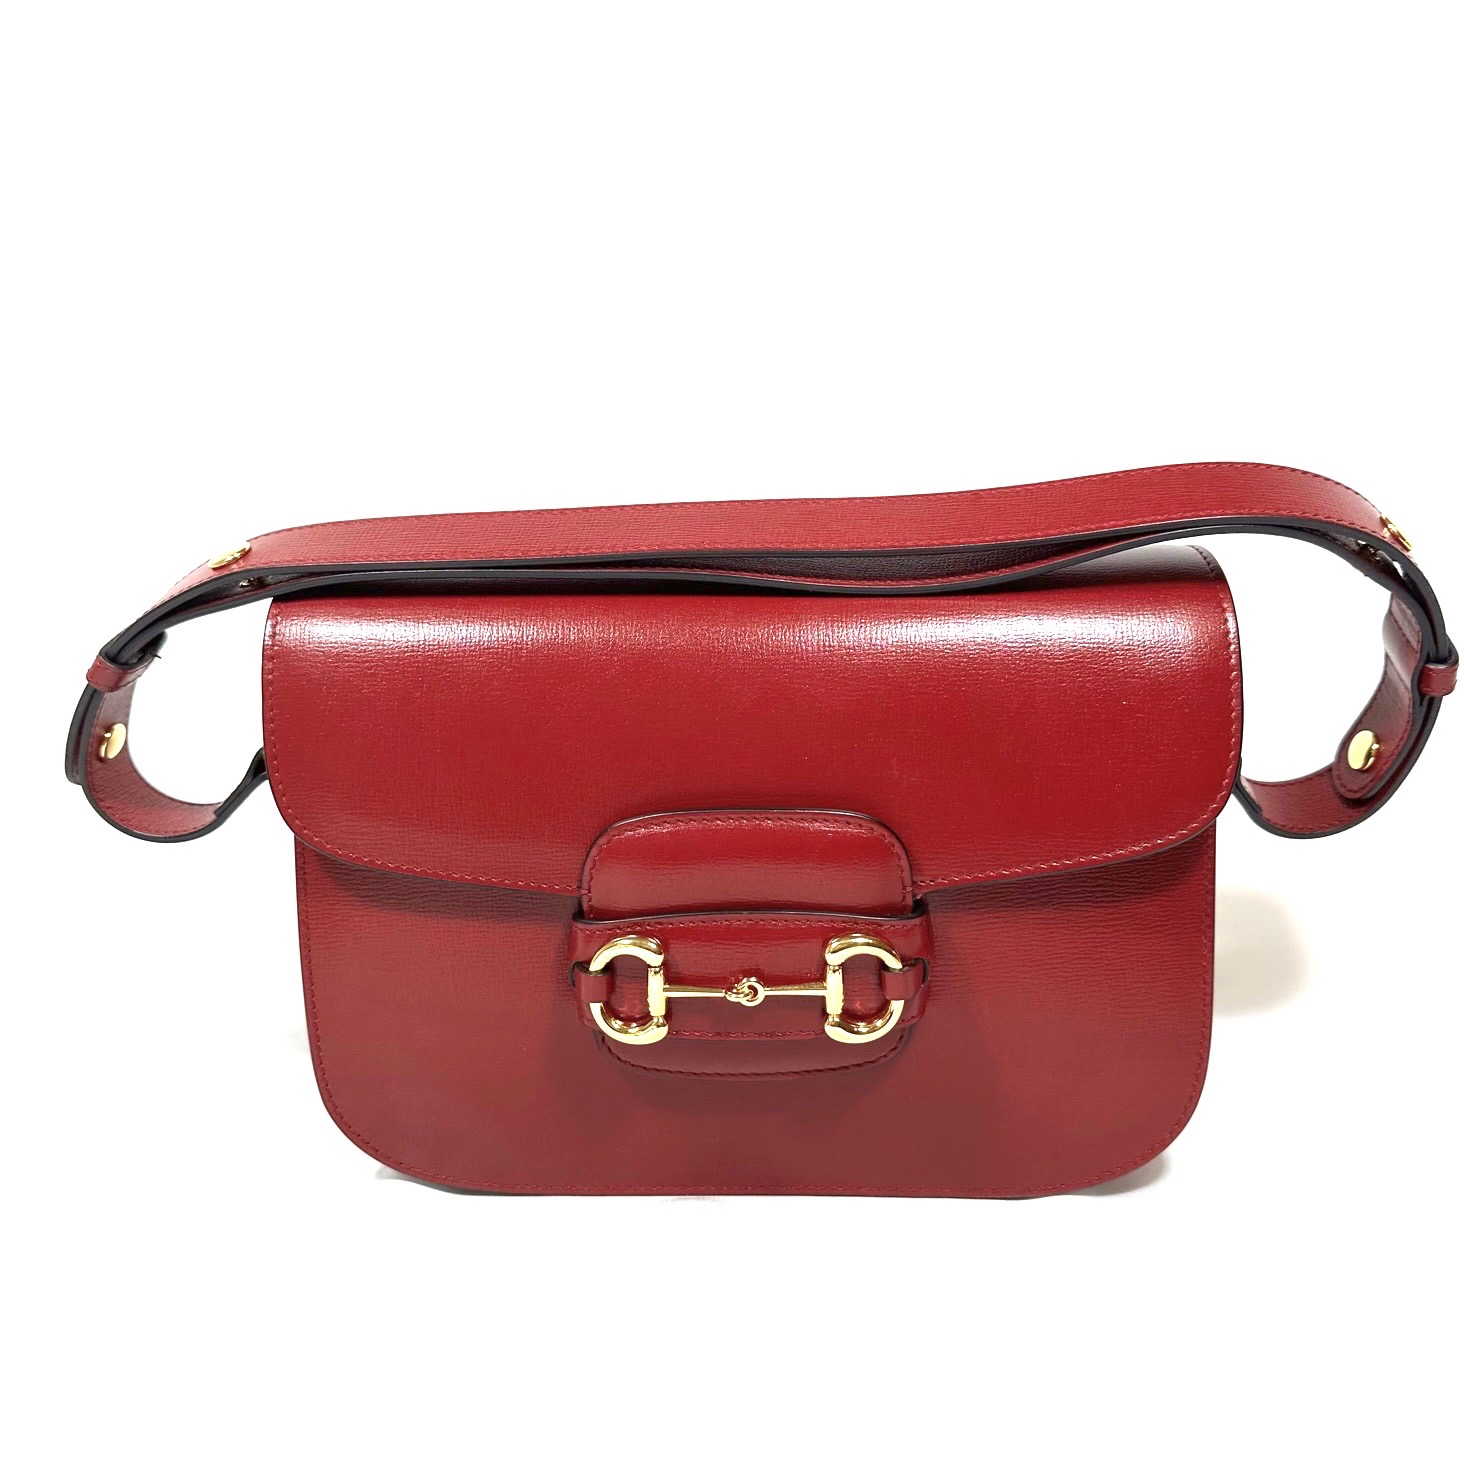 Gucci Horsebit 1955 Crossbody Bag - Red